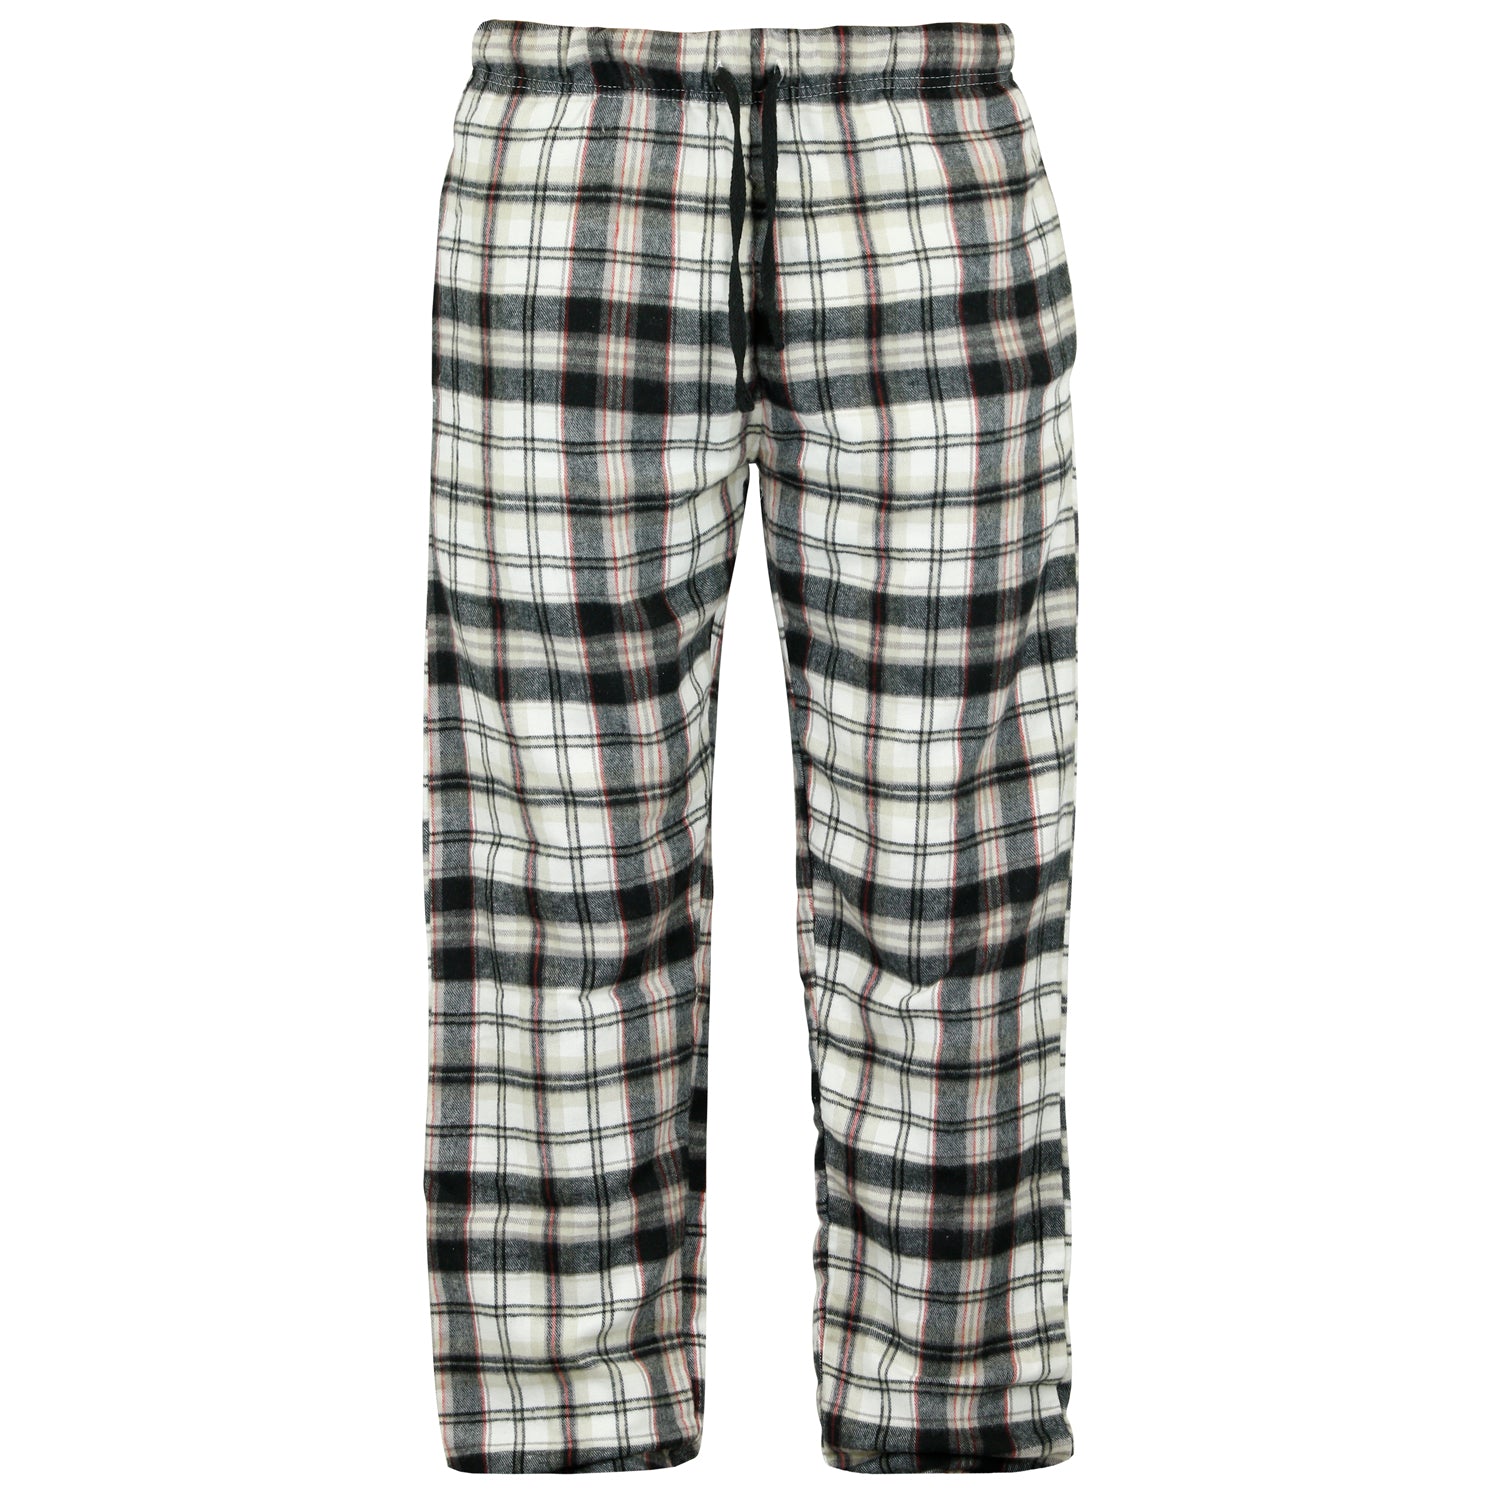 Men's Super Soft Fleece Pants Soft & Warm Realtree Maroon Plaid Lounge Pants